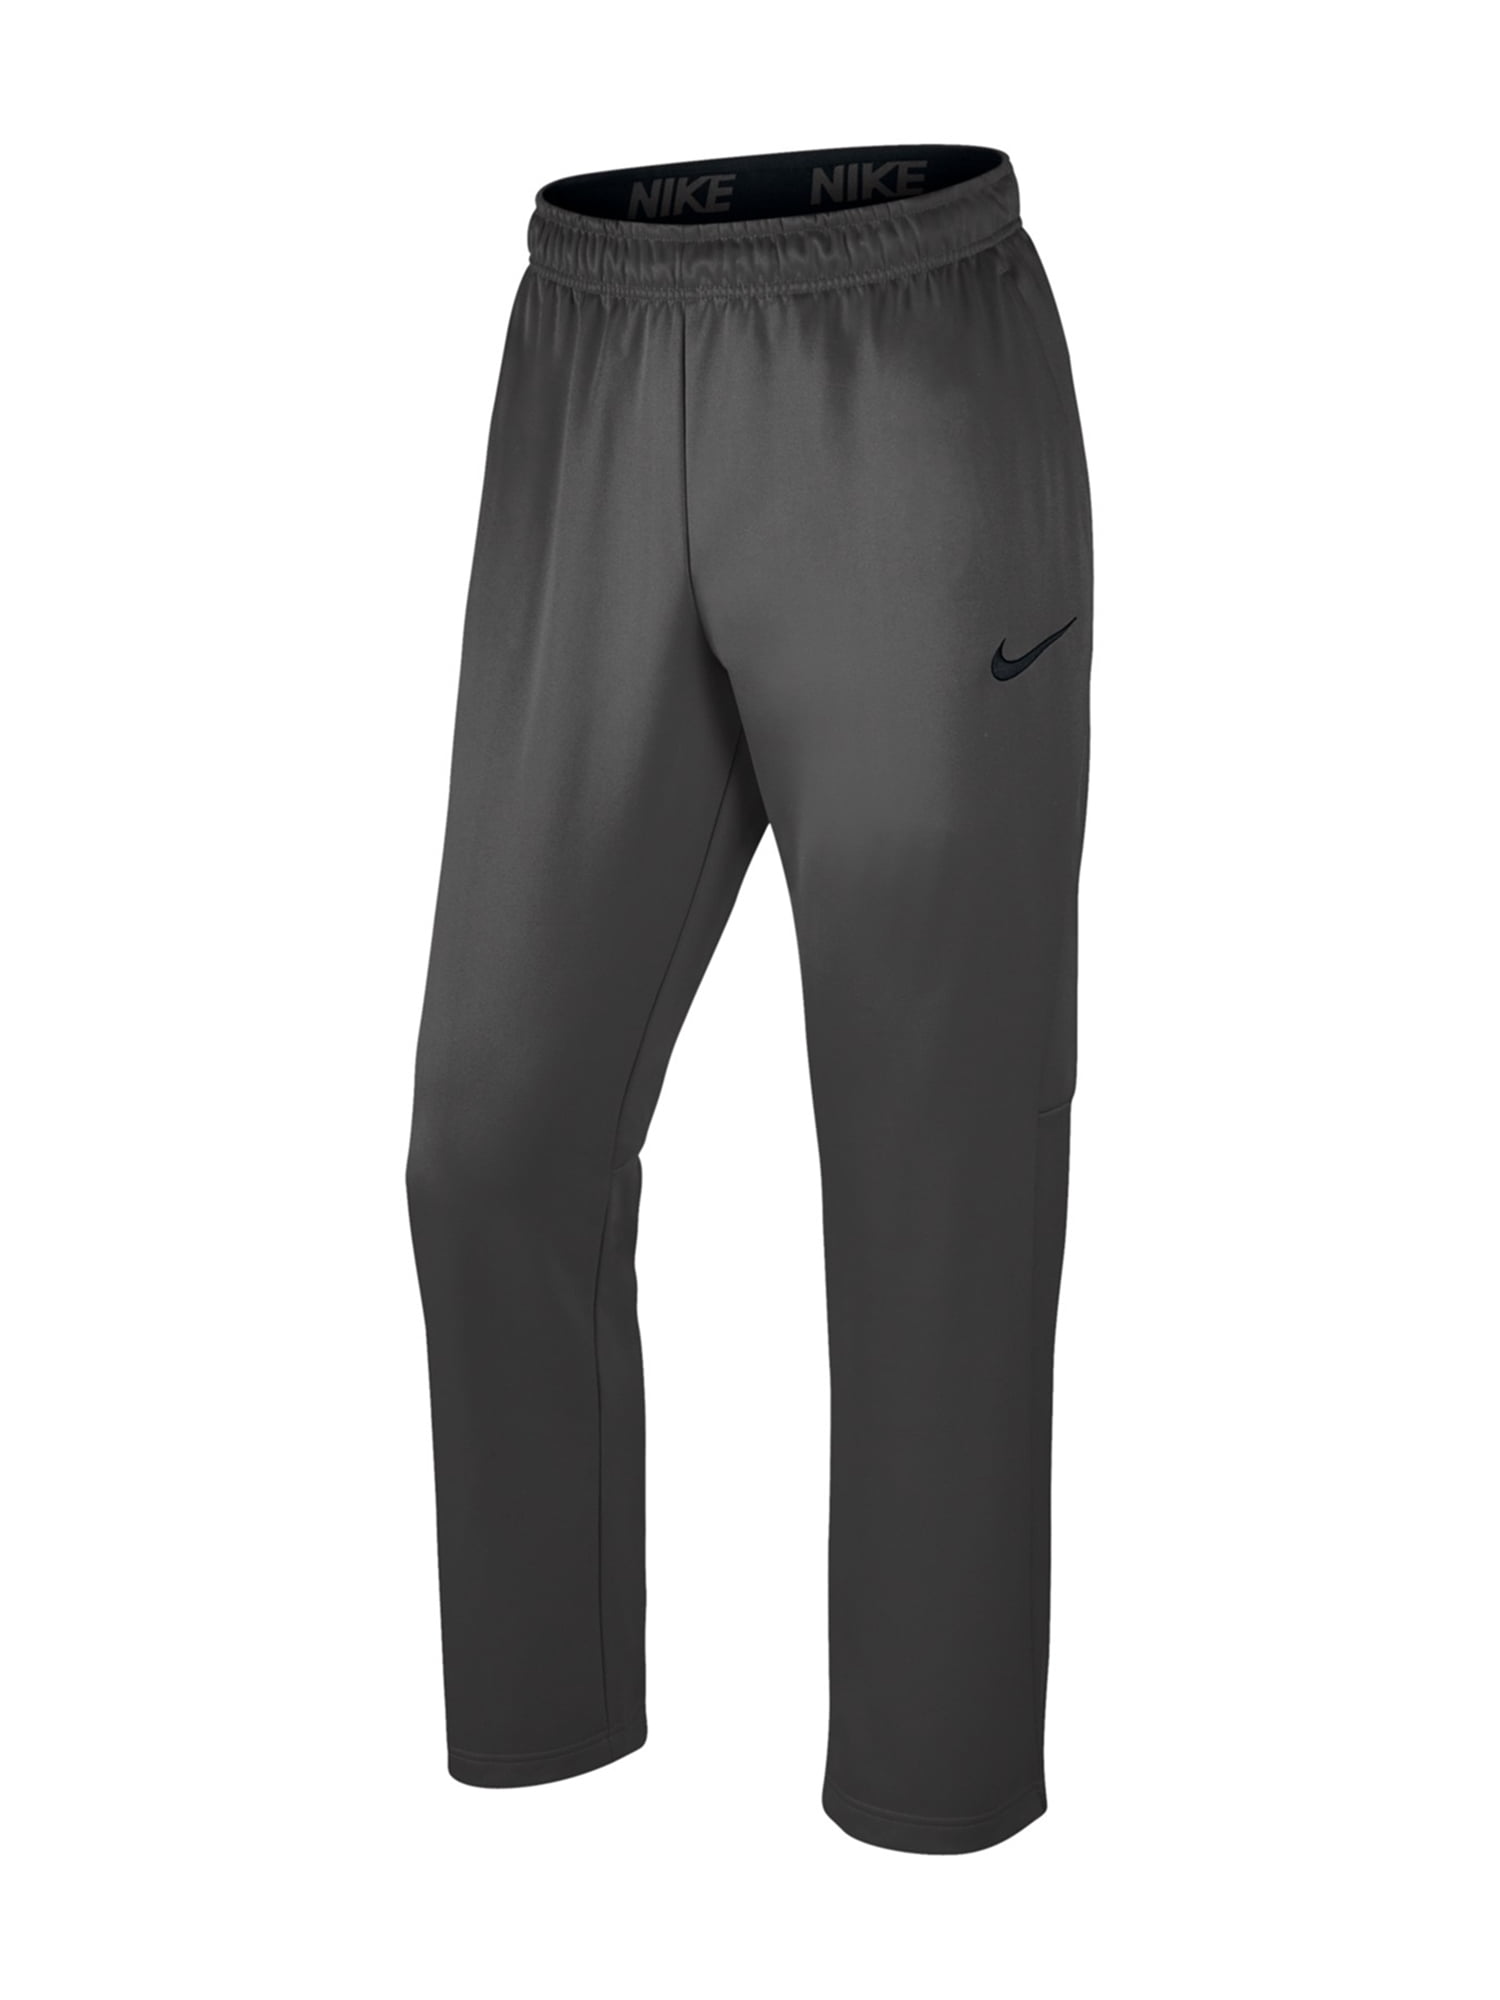 Nike - Nike Mens Open-Bottom Casual Sweatpants - Walmart.com - Walmart.com